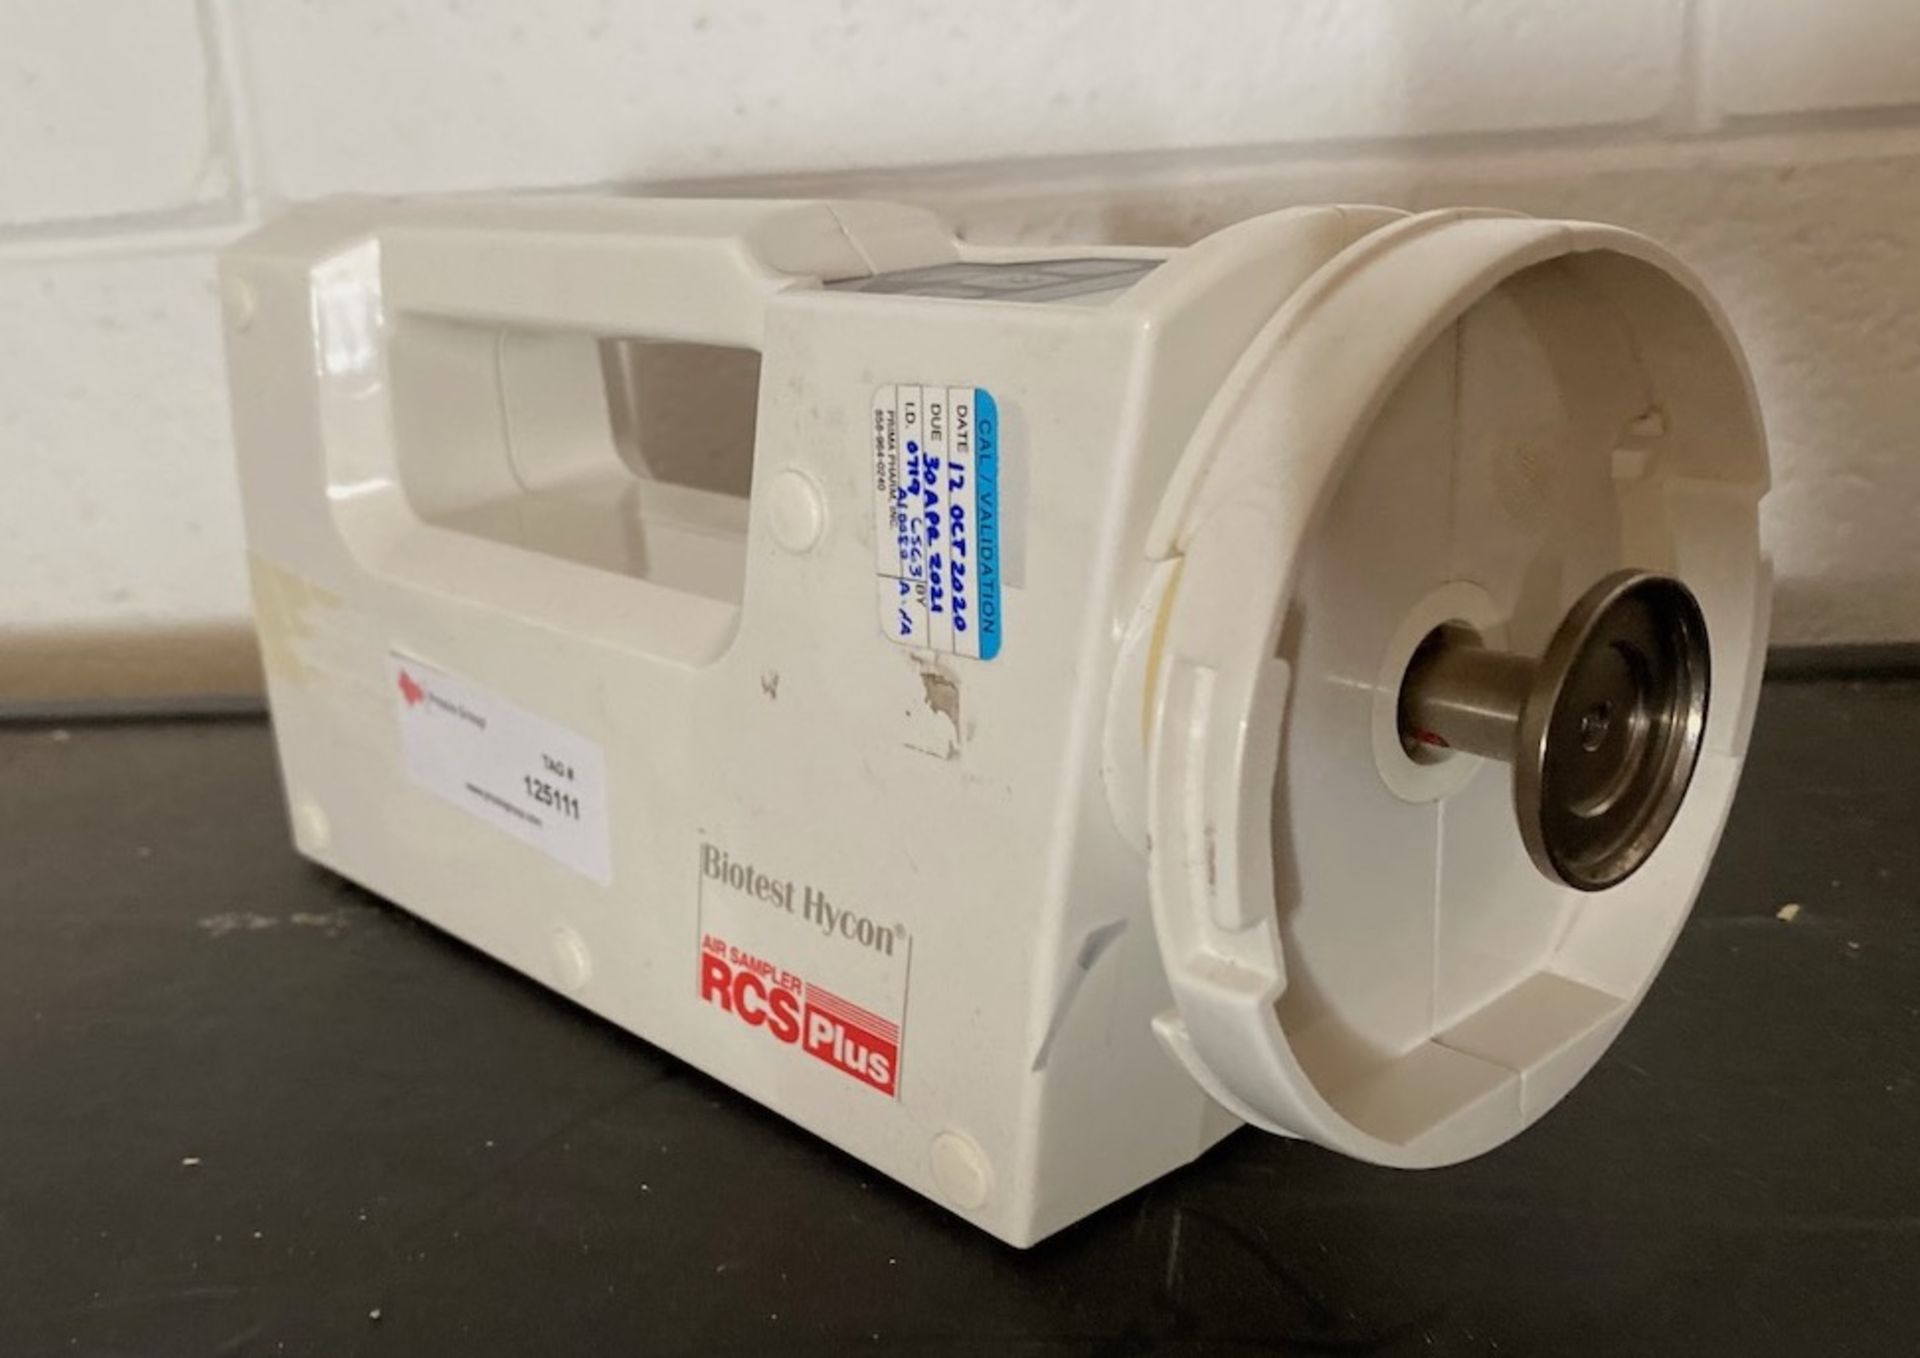 Biotest Hycon RCS Plus Air Sampler